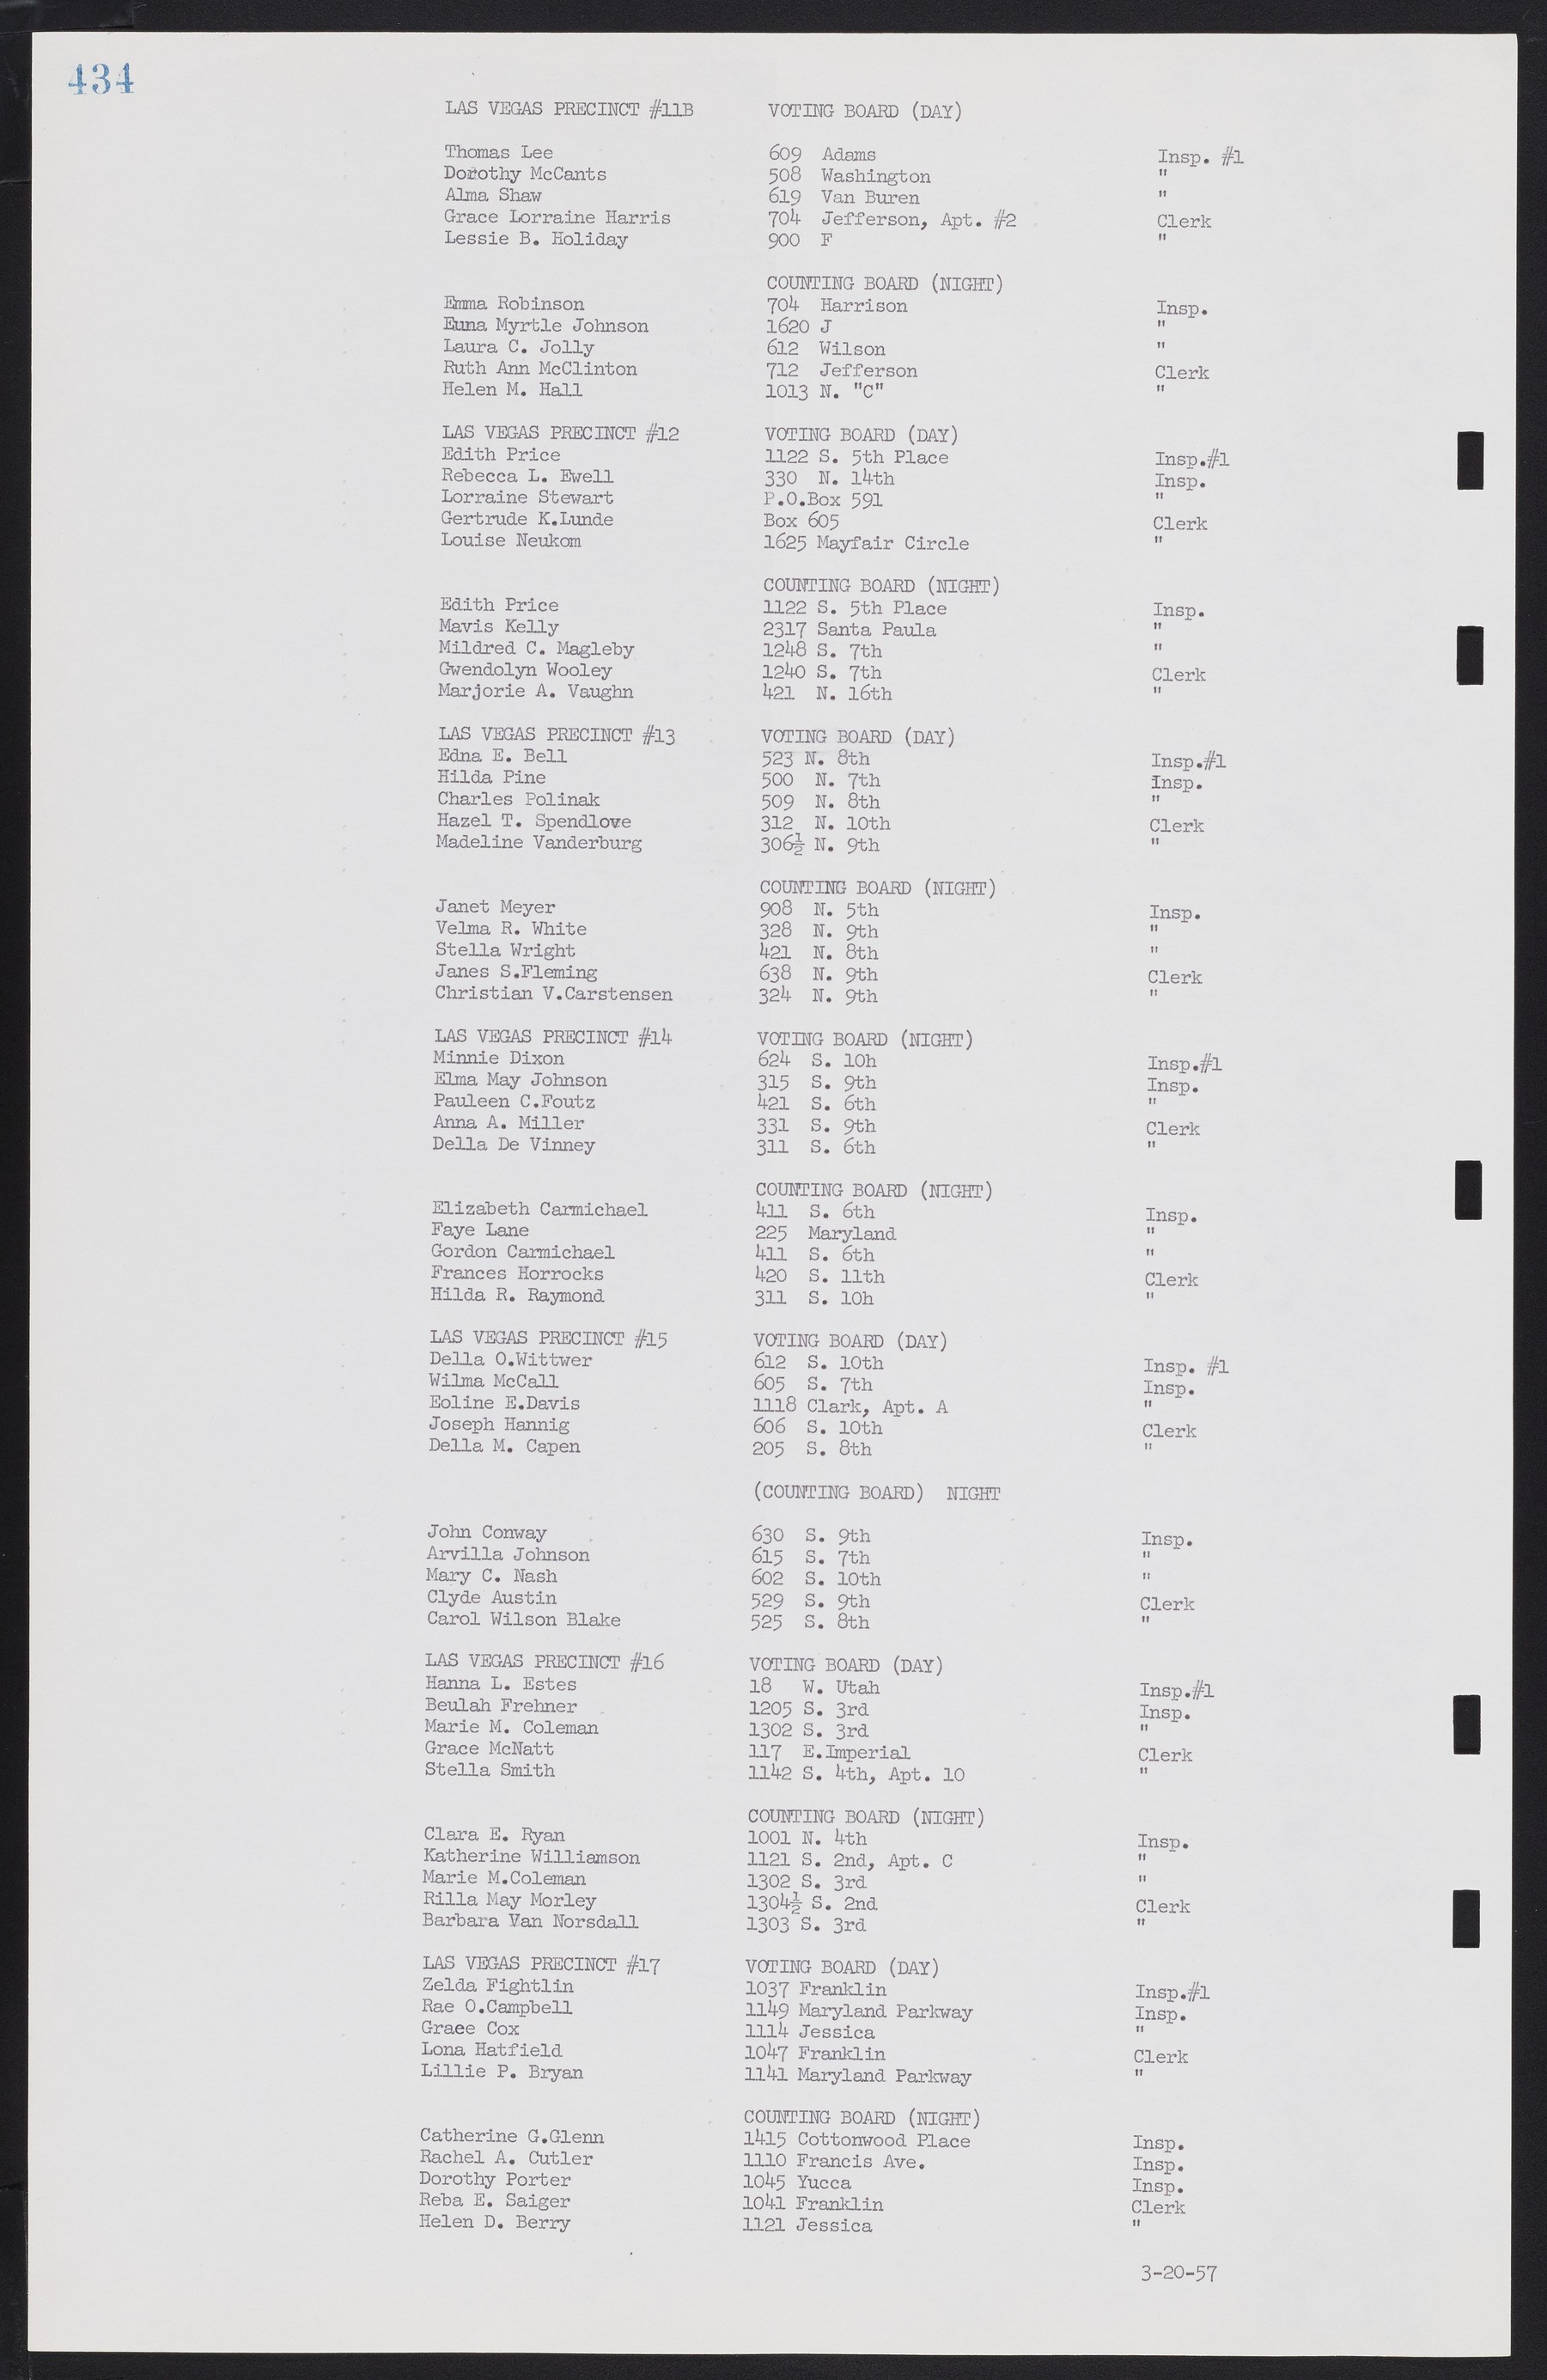 Las Vegas City Commission Minutes, September 21, 1955 to November 20, 1957, lvc000010-454